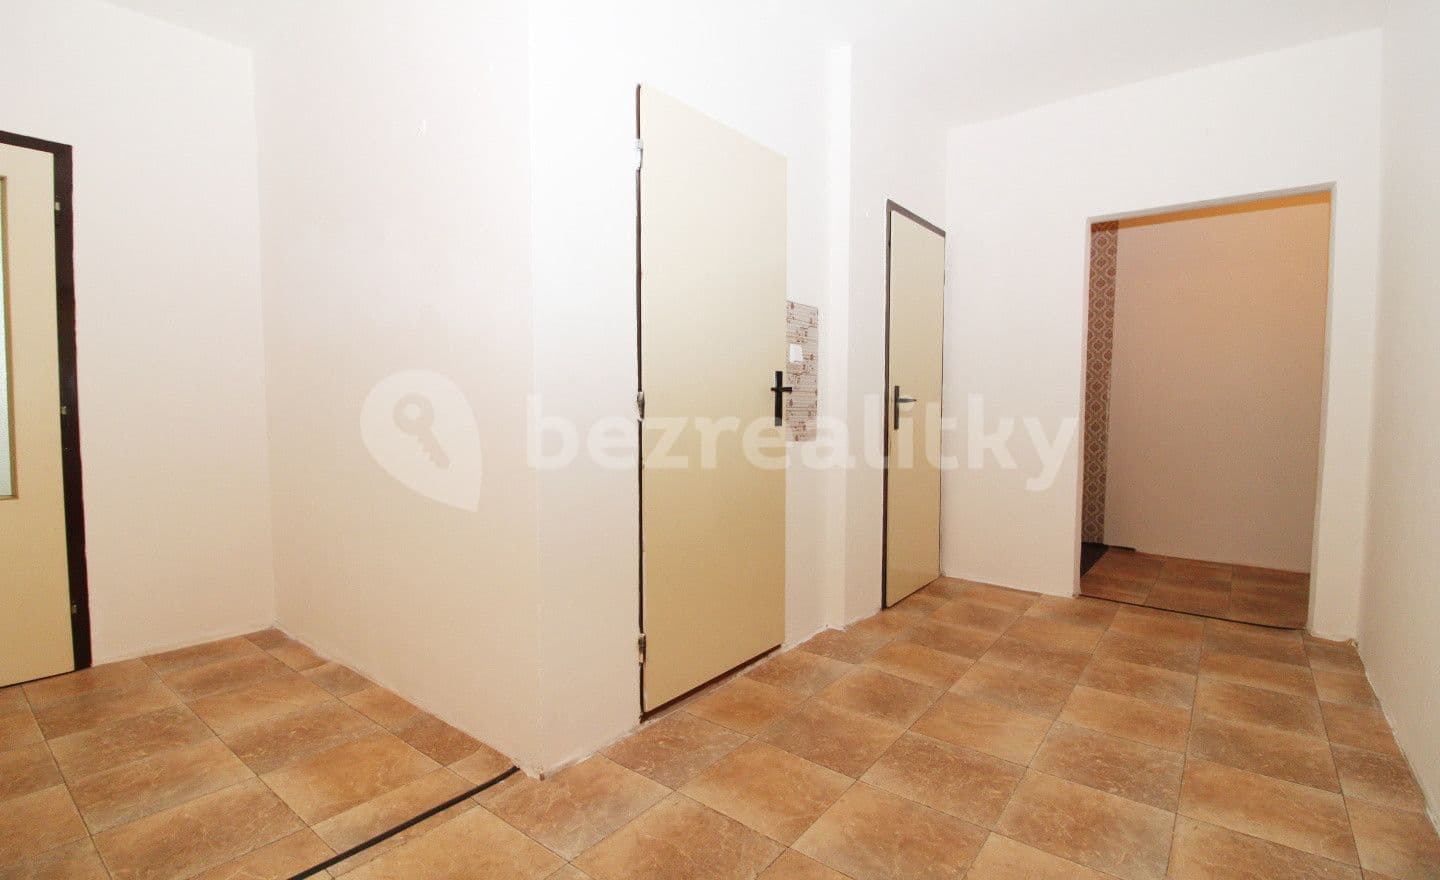 Predaj bytu 2-izbový 56 m², Severní, Česká Lípa, Liberecký kraj